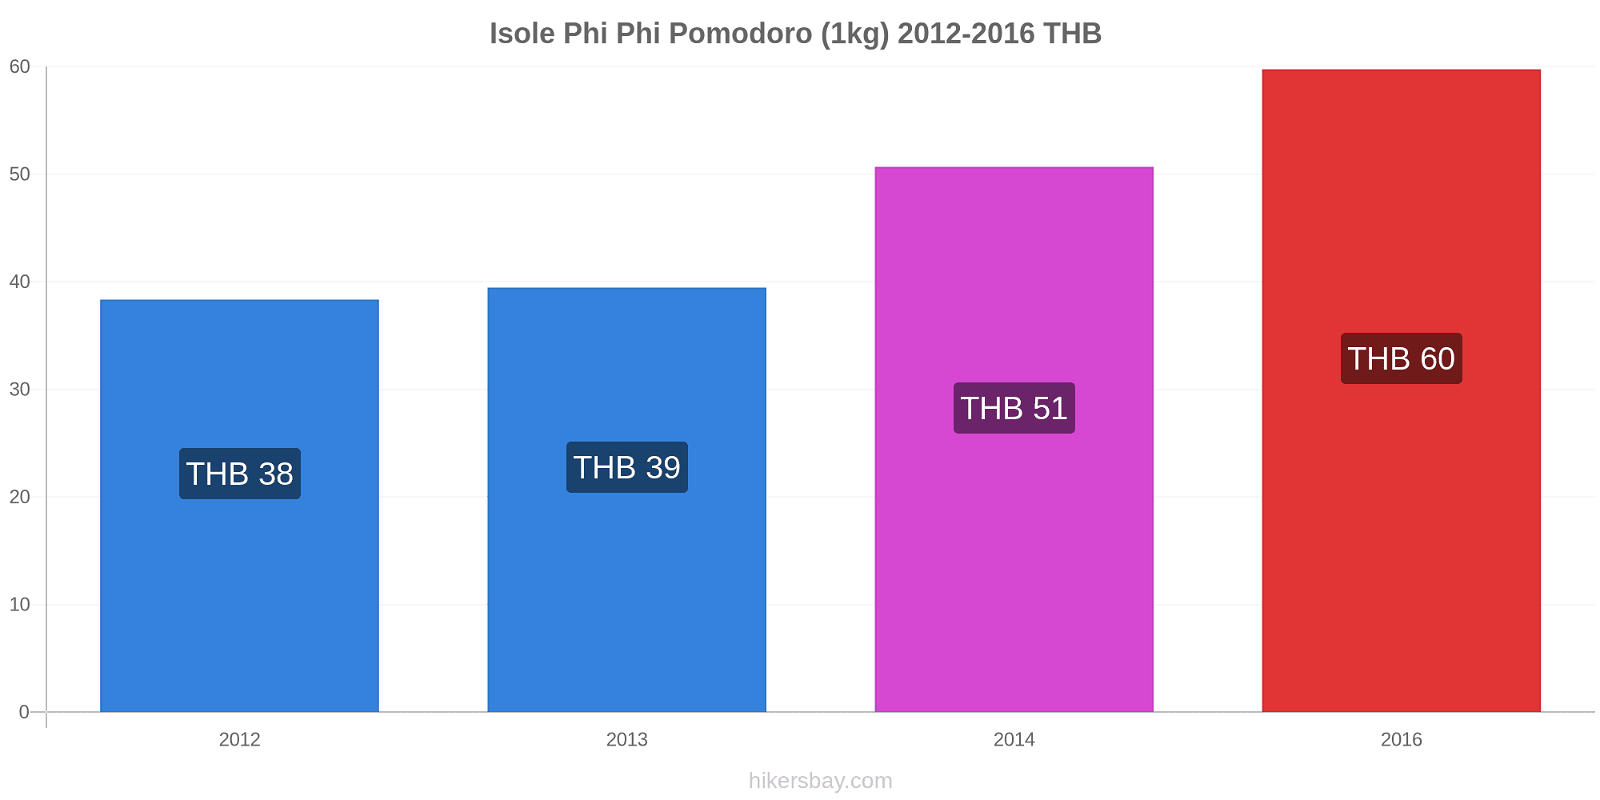 Isole Phi Phi variazioni di prezzo Pomodoro (1kg) hikersbay.com